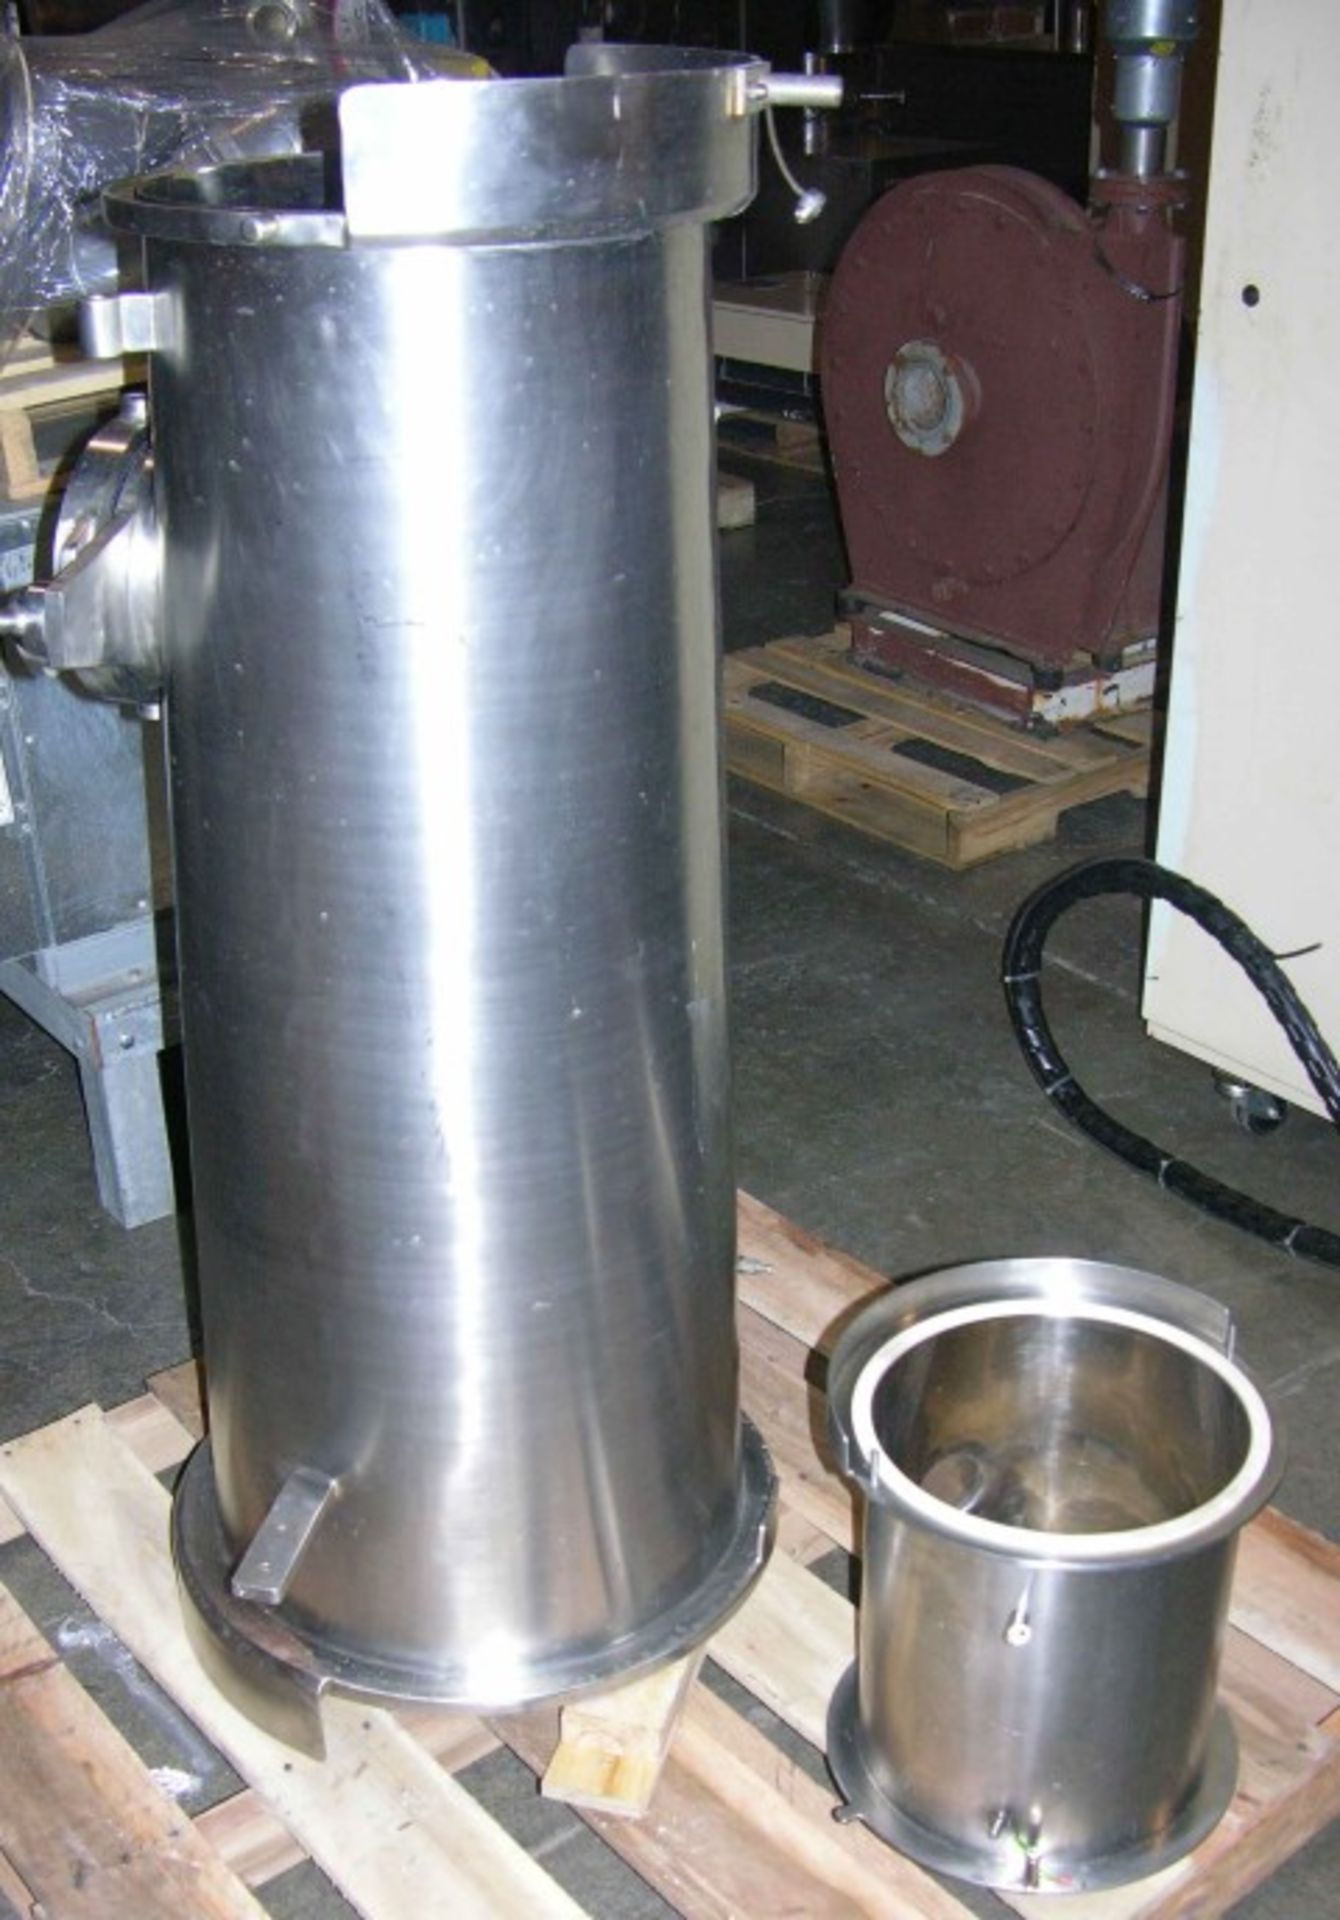 Glatt GPCG 5 fluid bed dryer / granulator stainless steel construction - Image 5 of 7